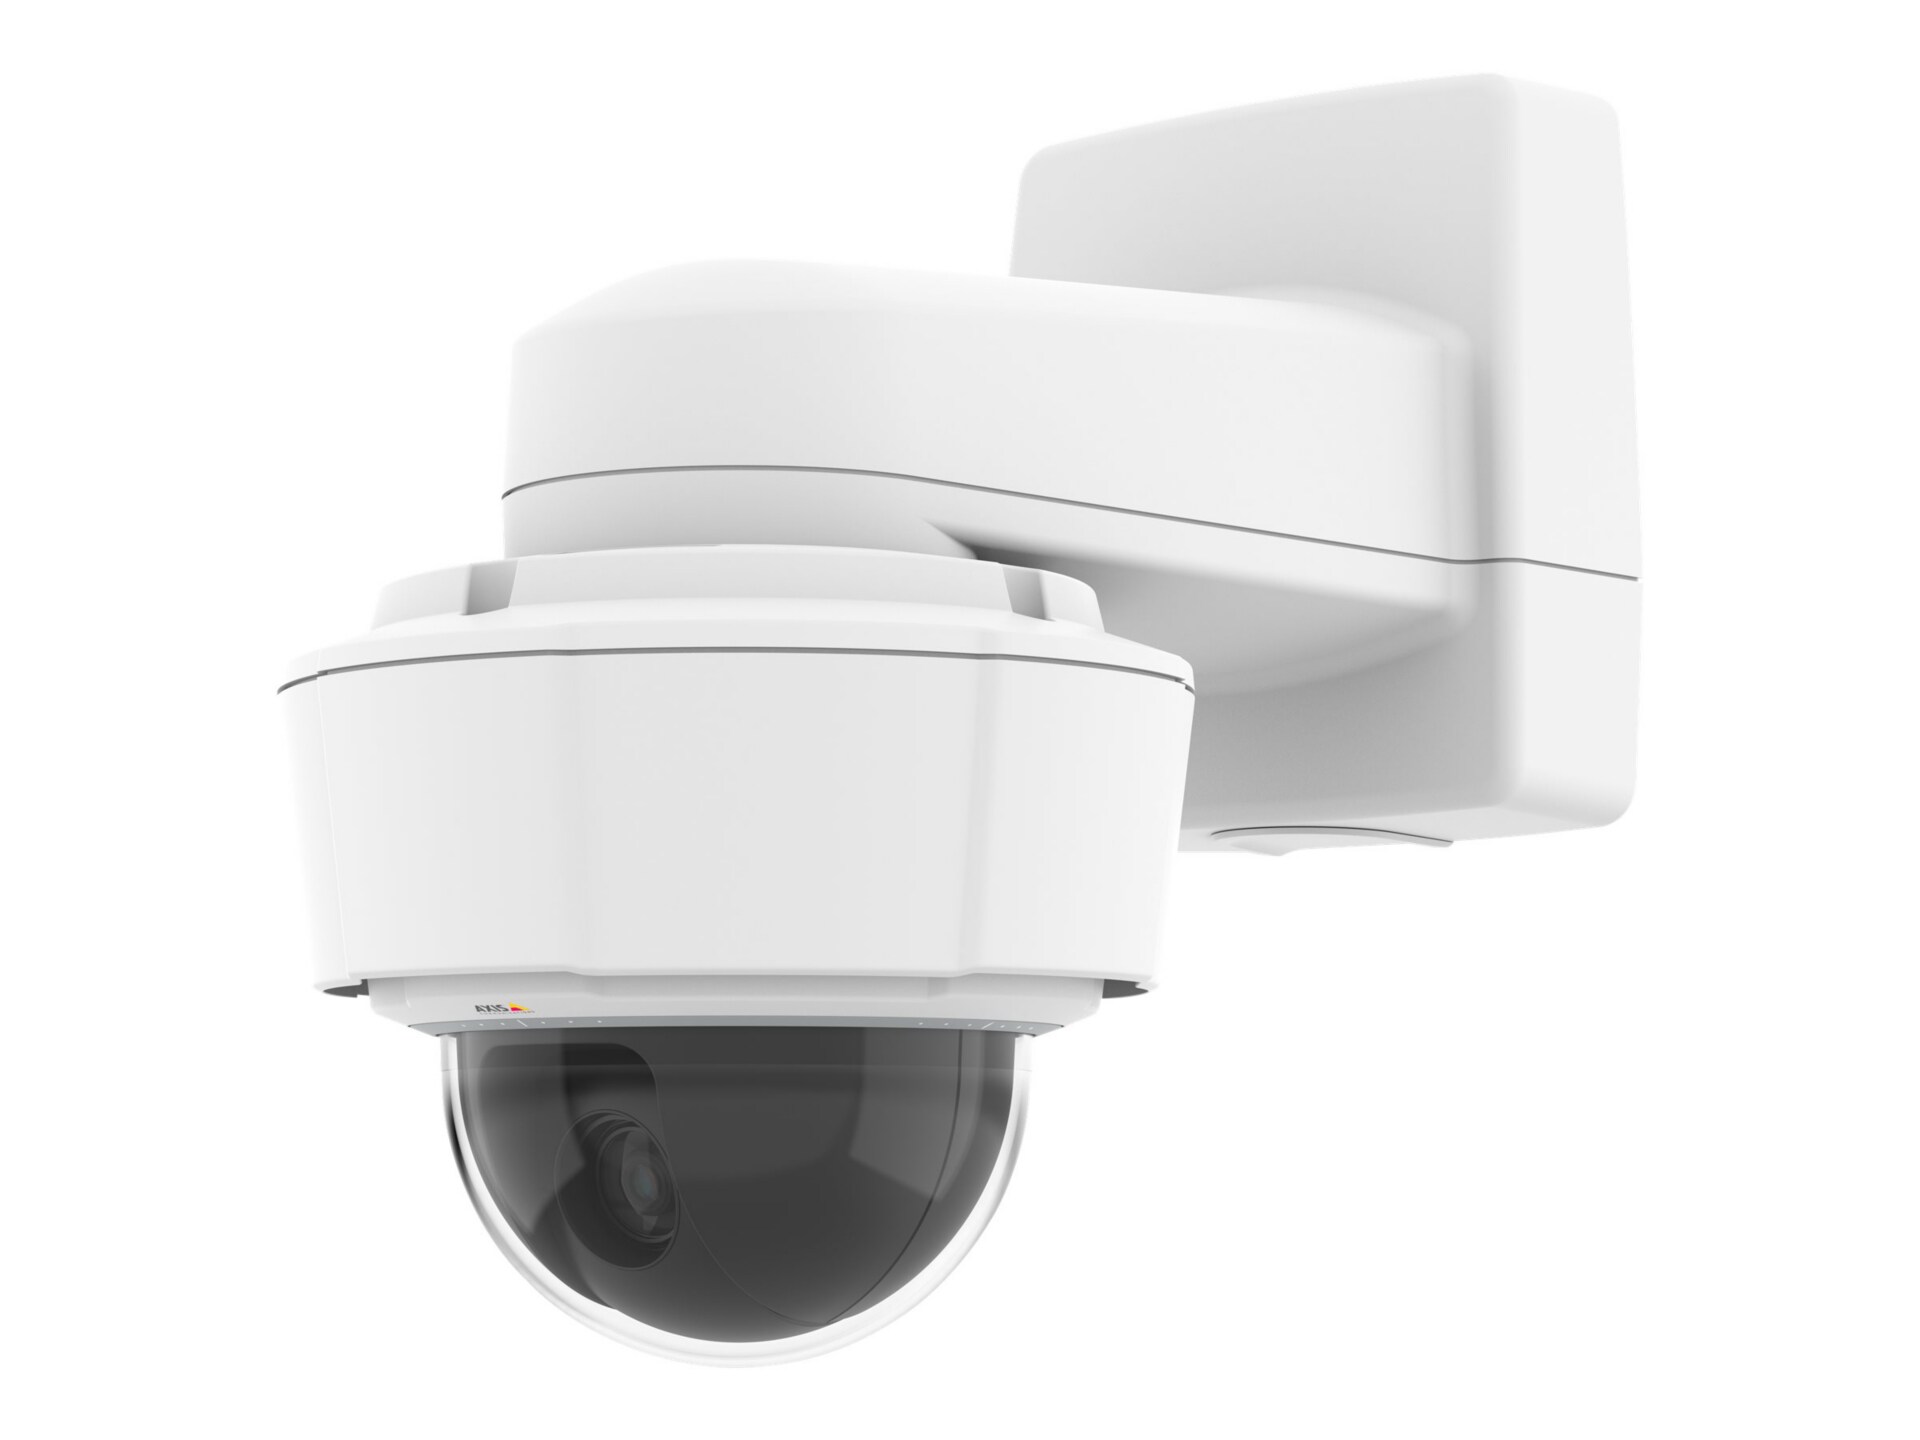 AXIS P5515-E 60Hz - network surveillance camera